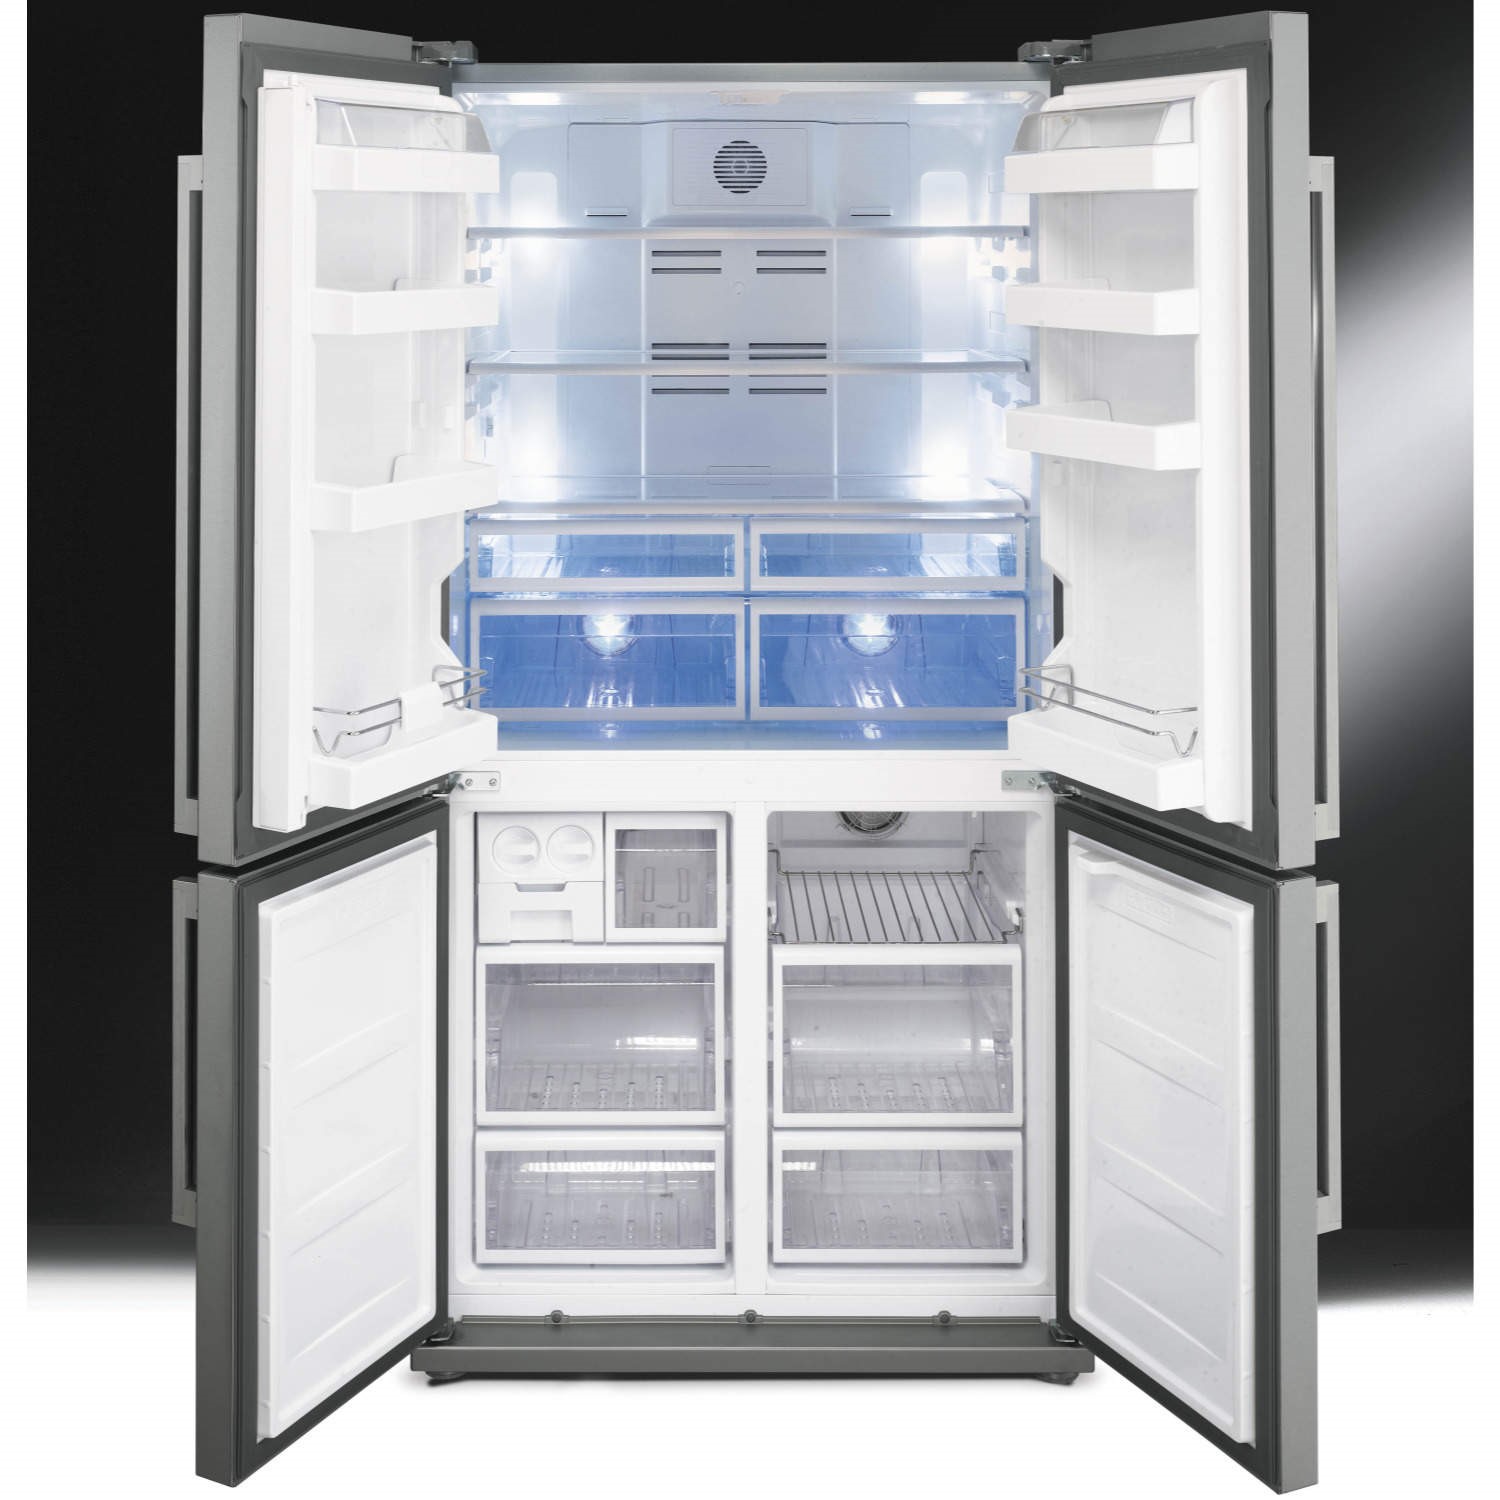 Smeg FQ60BPE White 4-door American Fridge Freezer With Convertible Compartment 